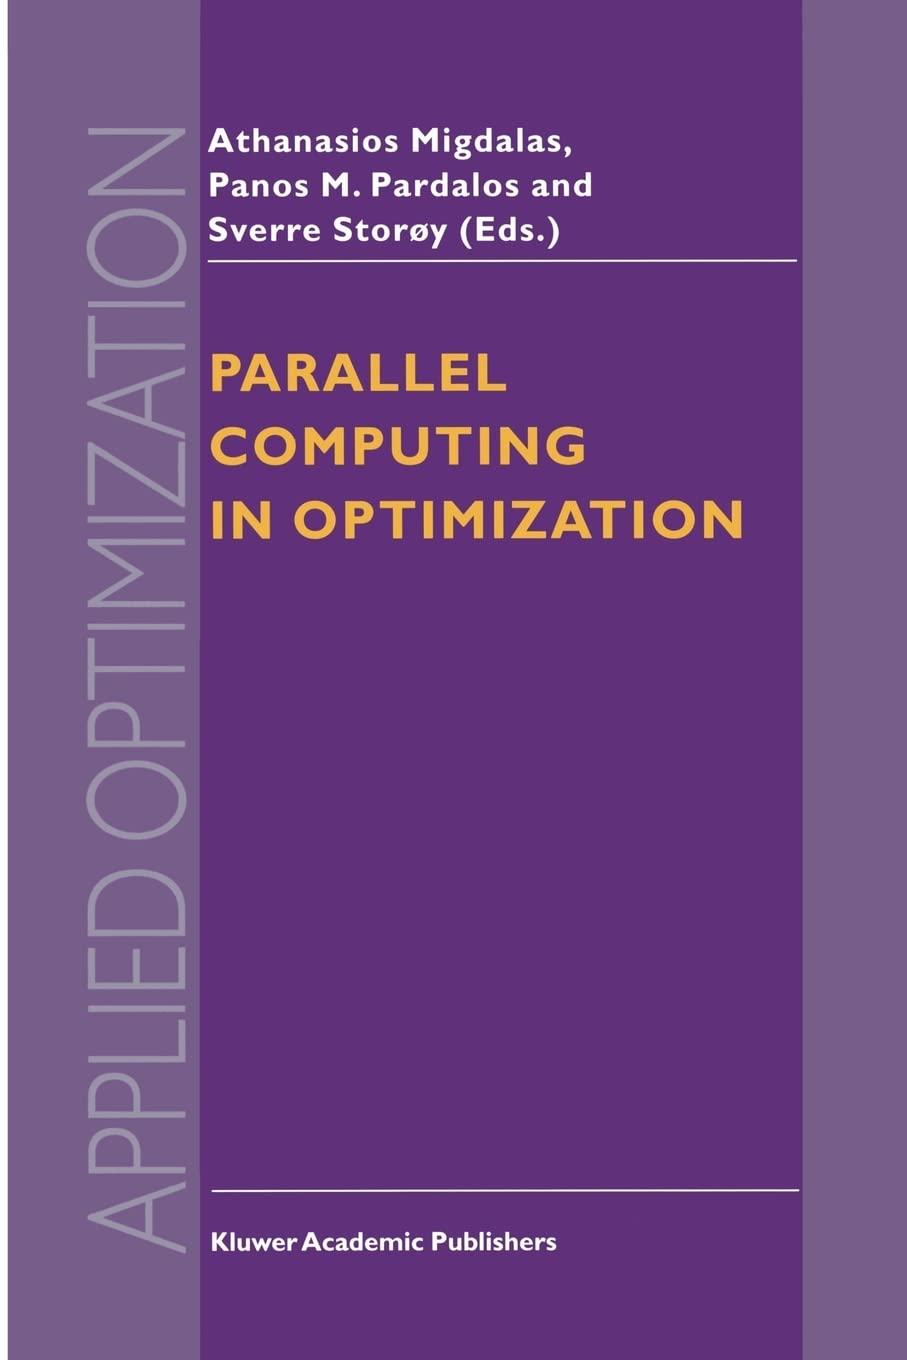 parallel computing in optimization applied optimization 1st edition a. migdalas, panos m. pardalos, sverre